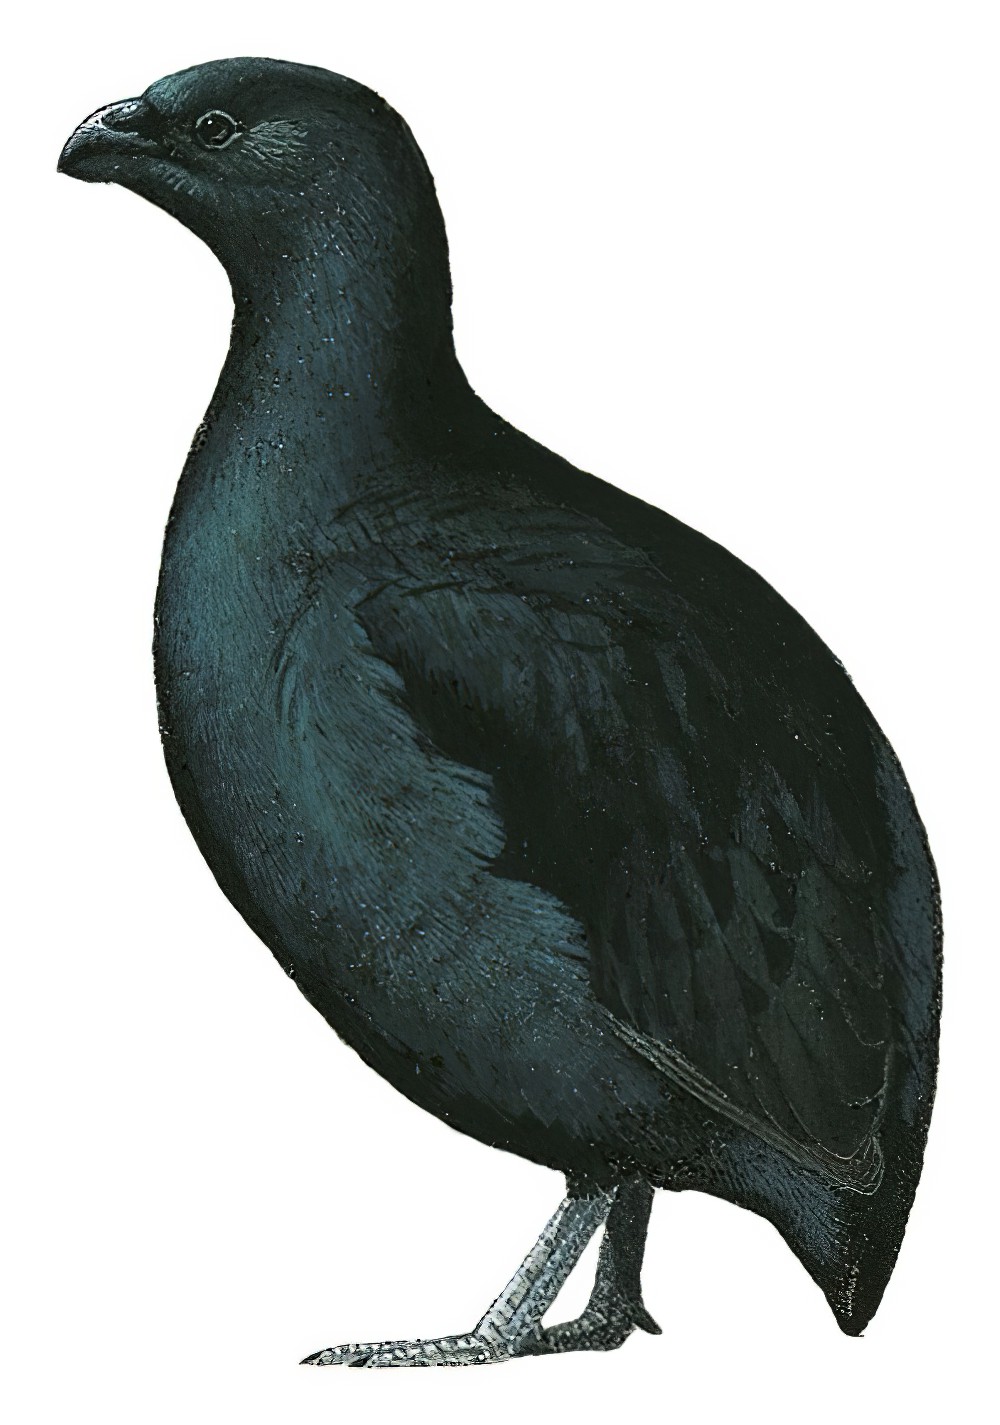 Black Partridge / Melanoperdix niger